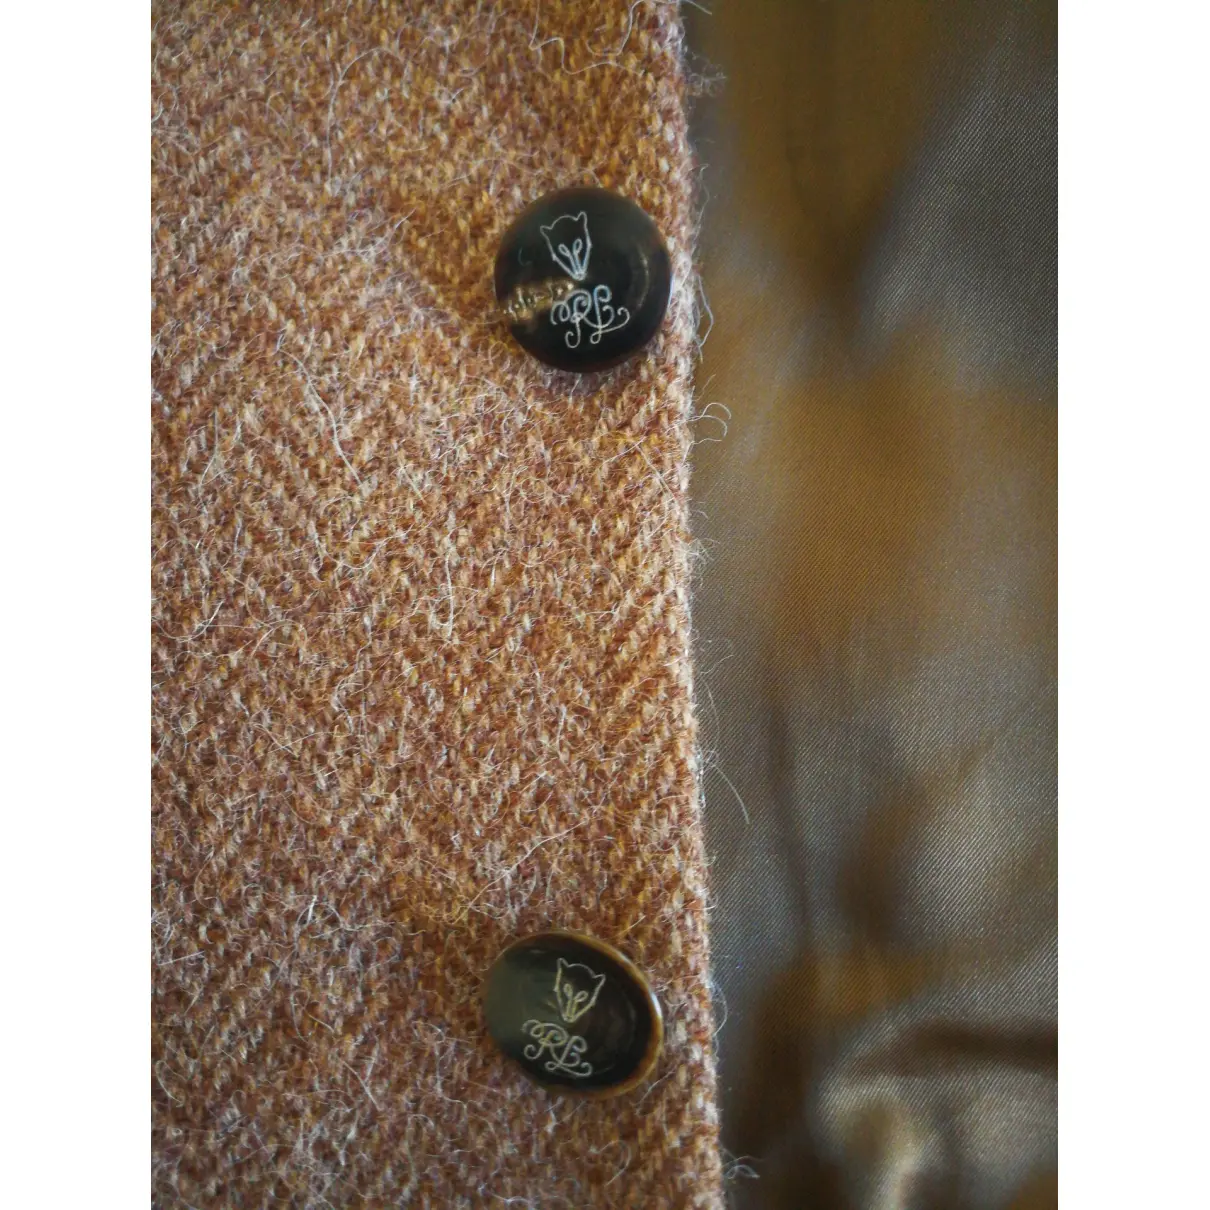 Wool blazer Ralph Lauren